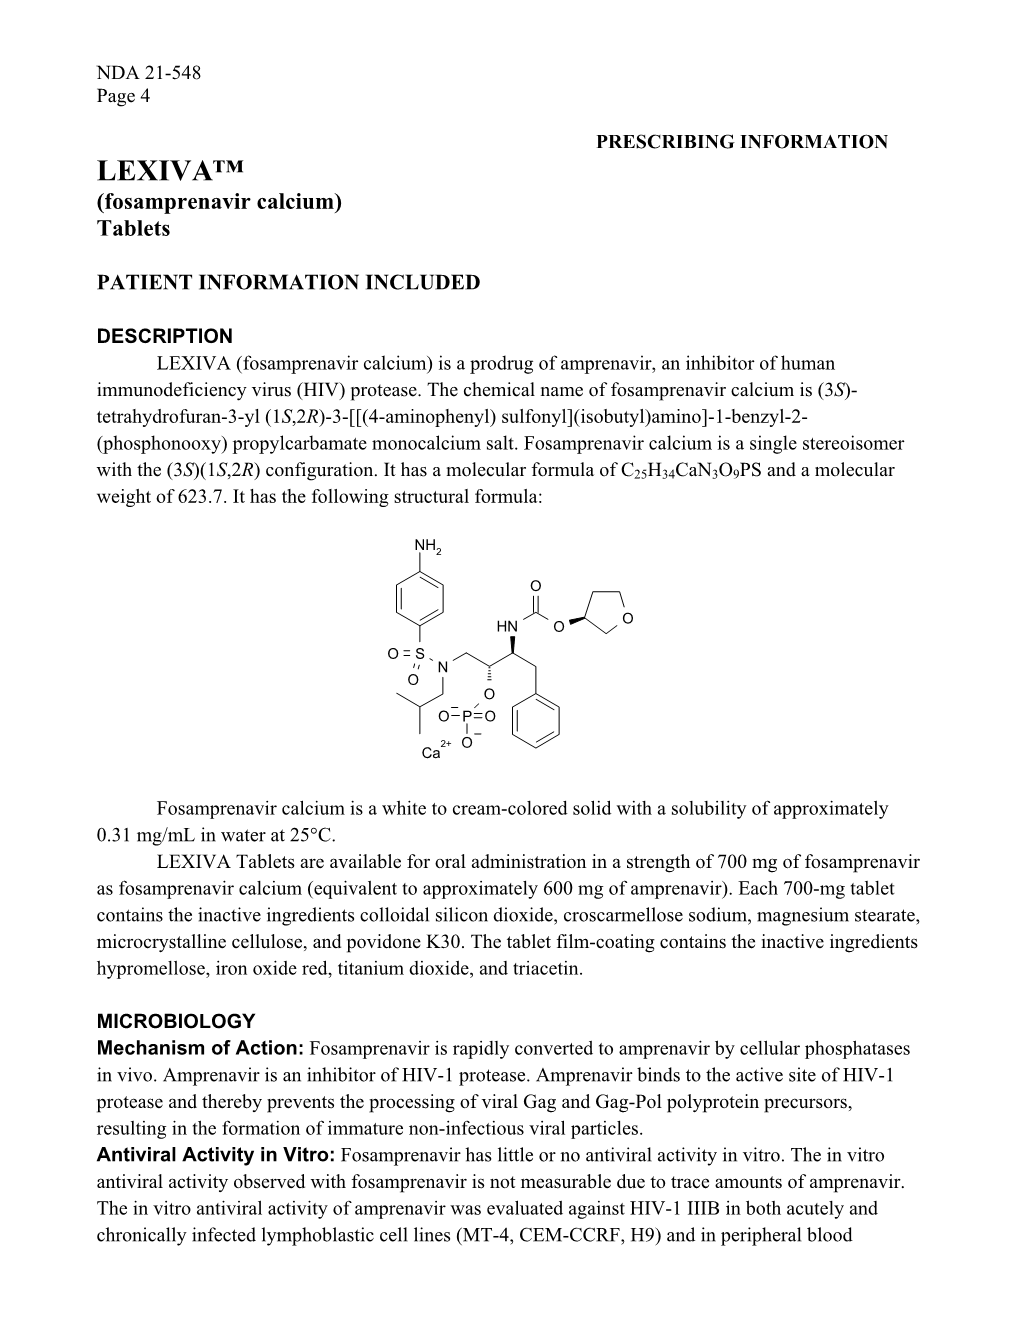 LEXIVA™ (Fosamprenavir Calcium) Tablets